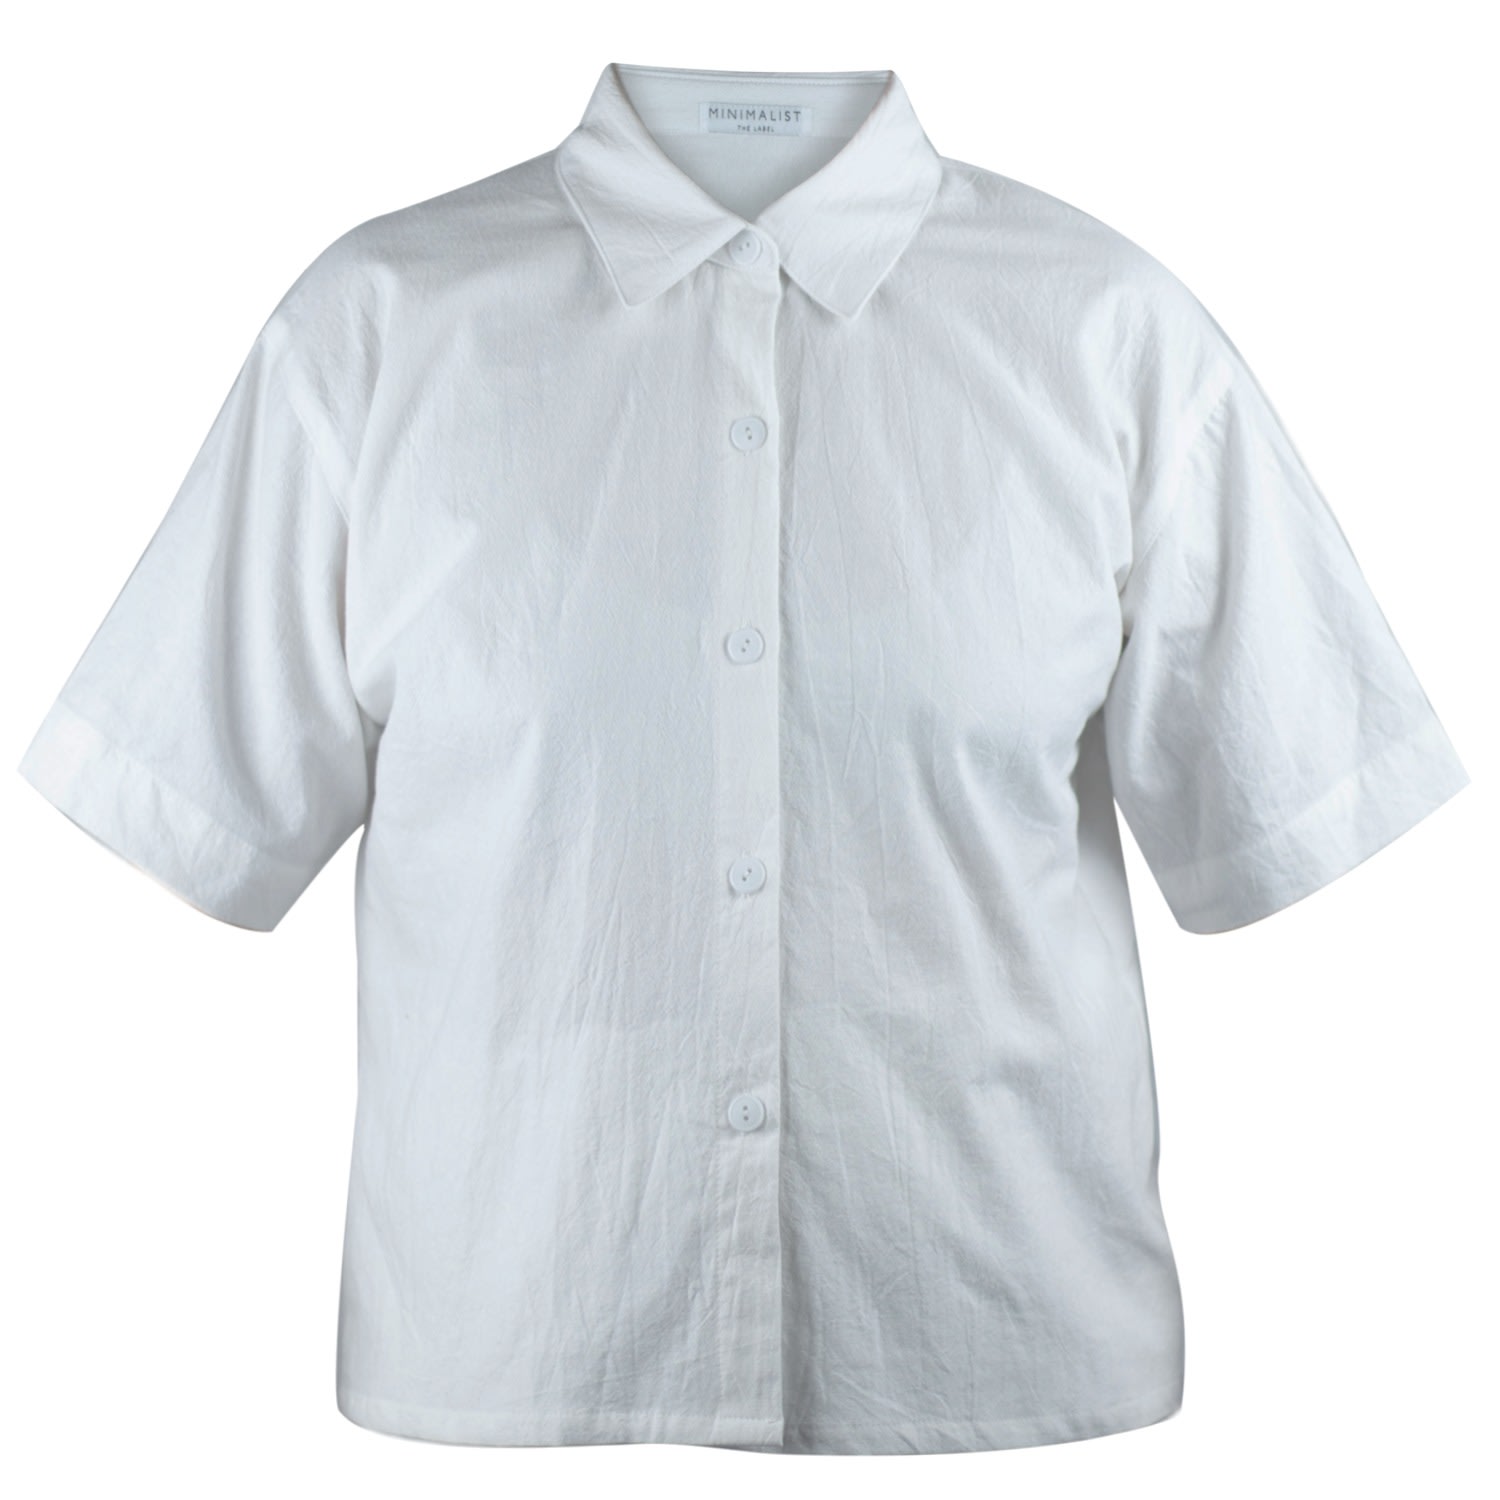 Women’s Ivy Shirt White Large Minimalist the Label